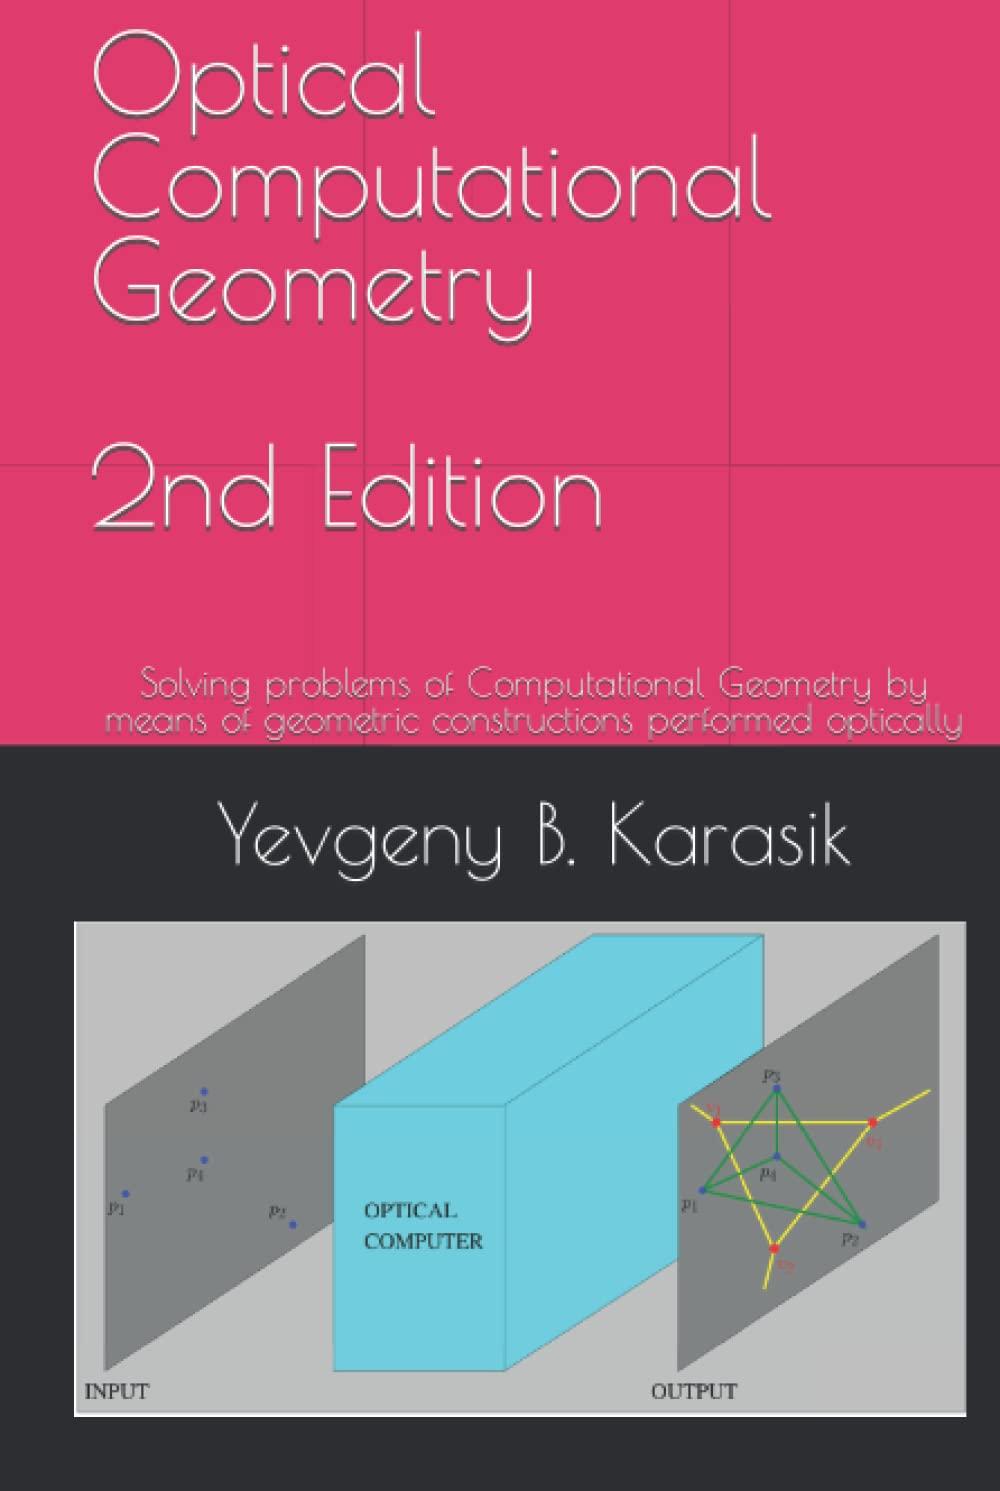 optical computational geometry solving problems of computational geometry by means of geometric constructions